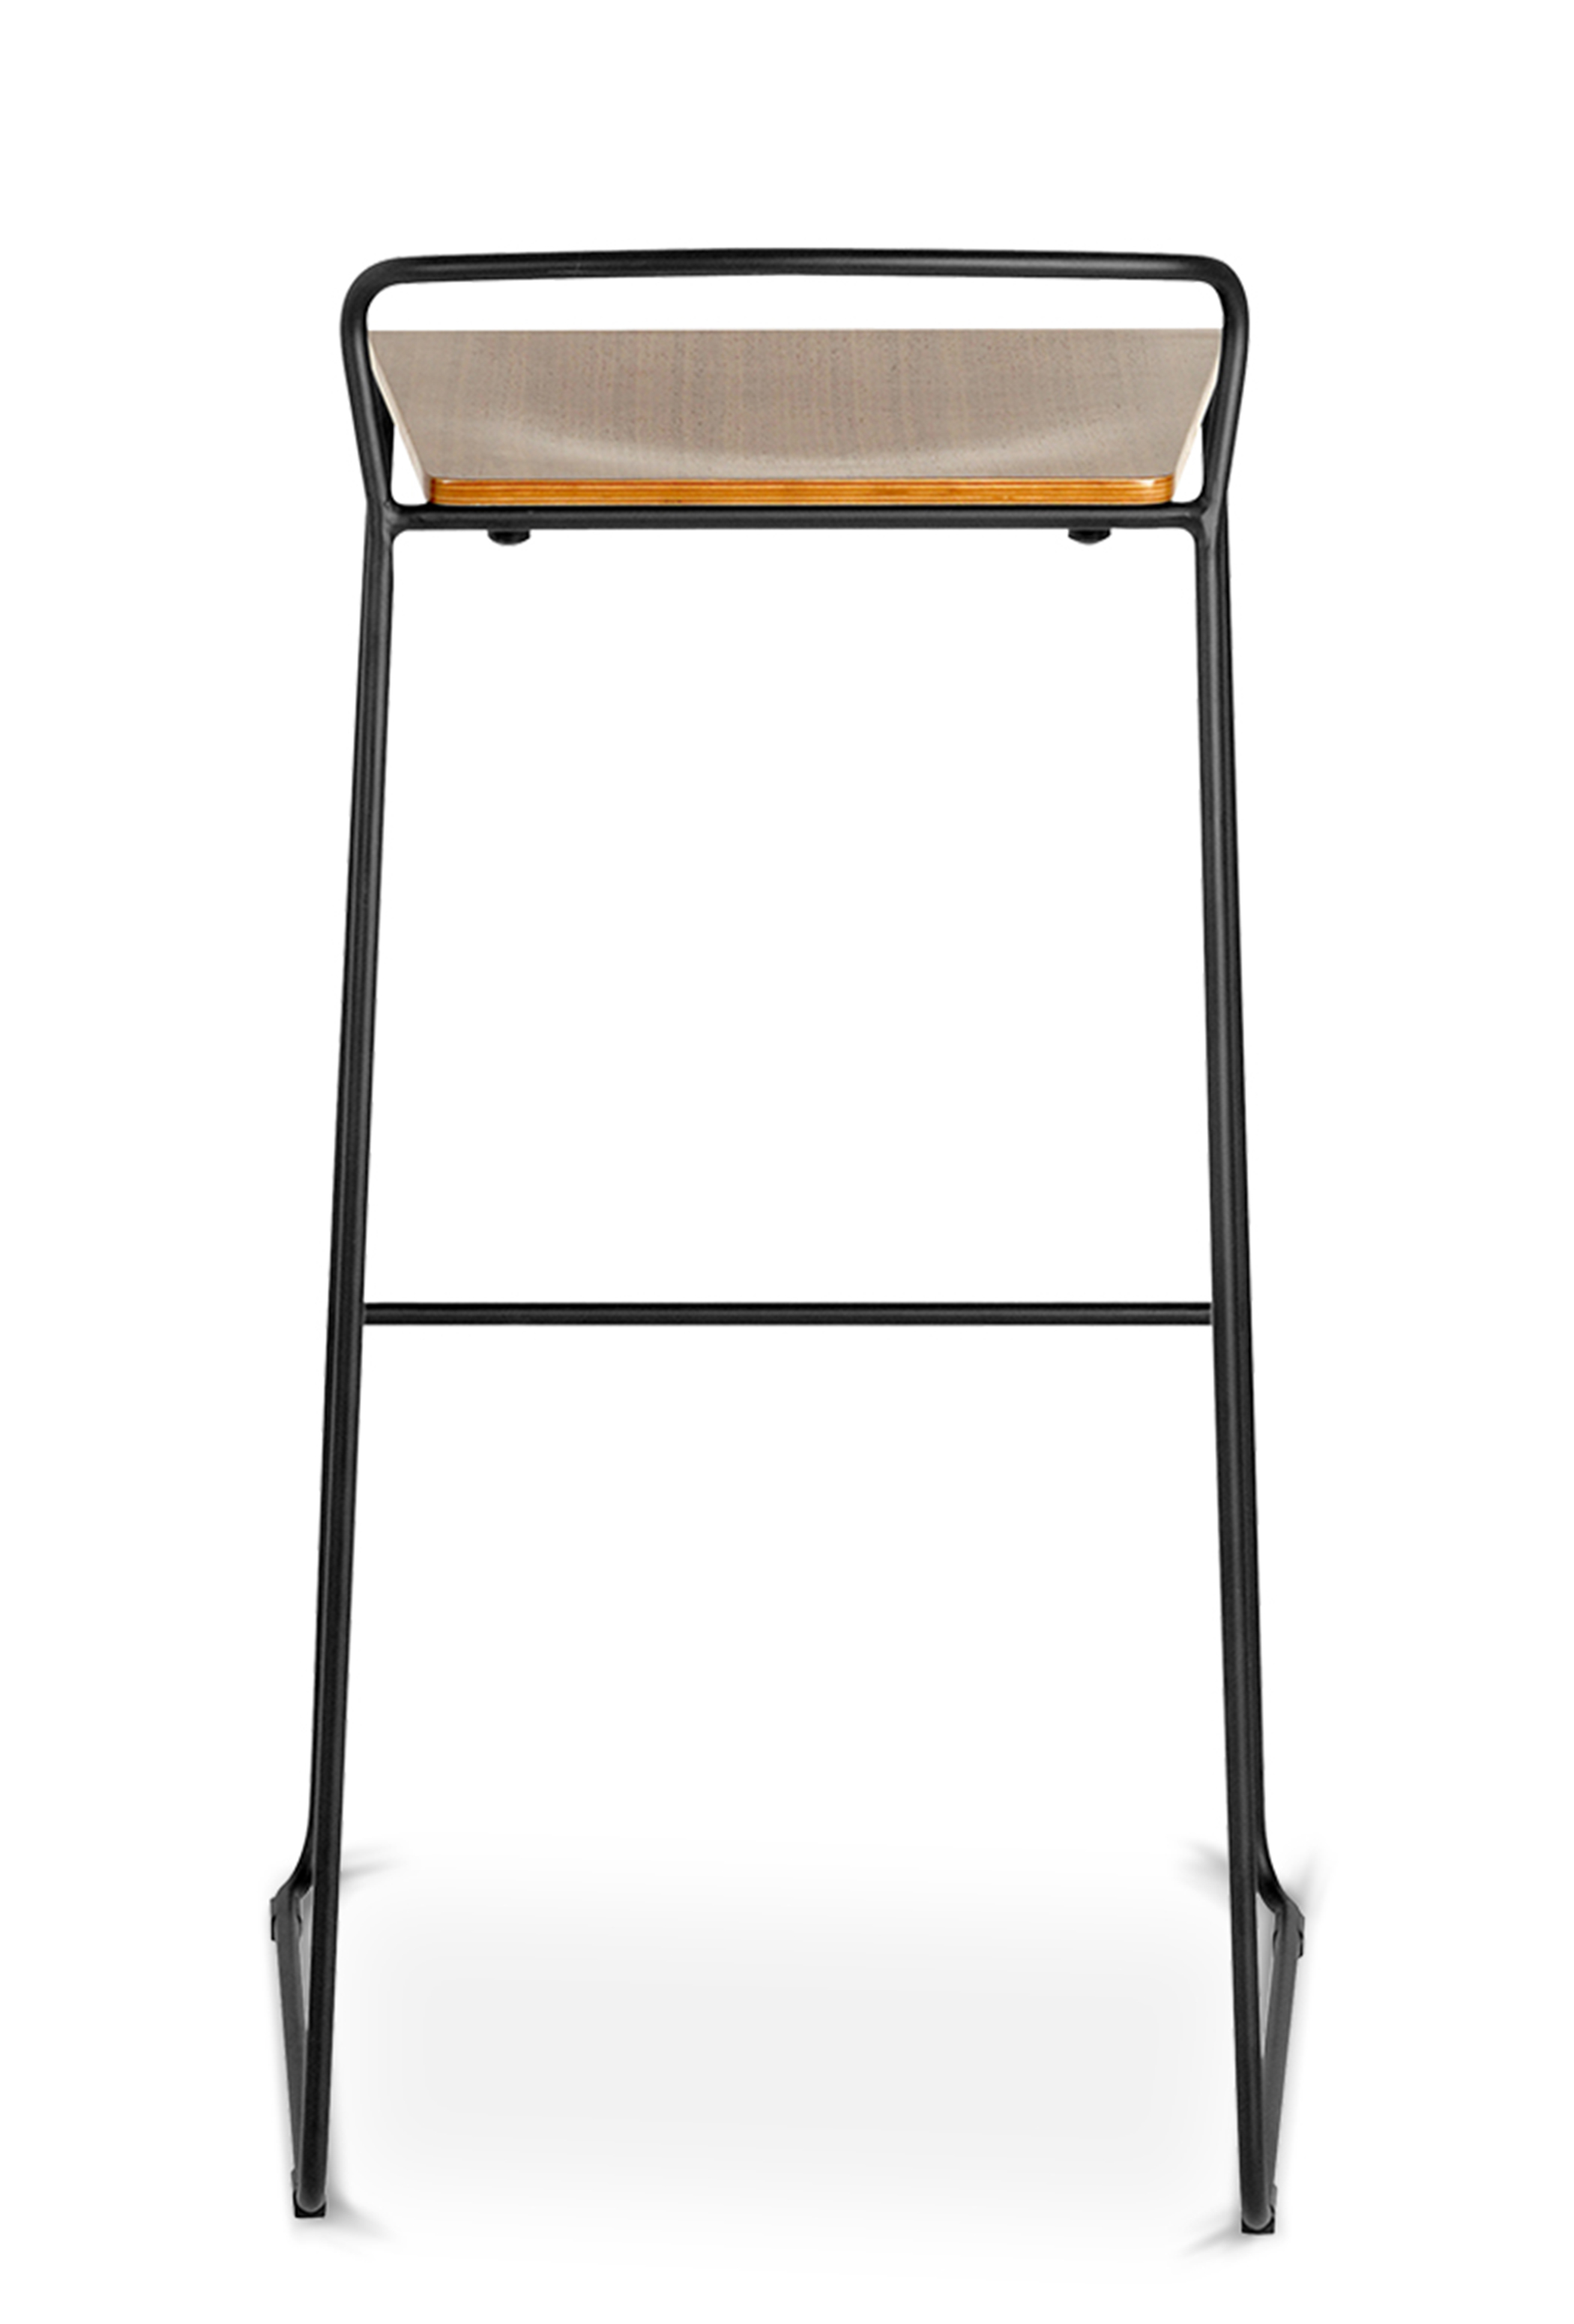 WS - Transit high stool - Walnut (Back)